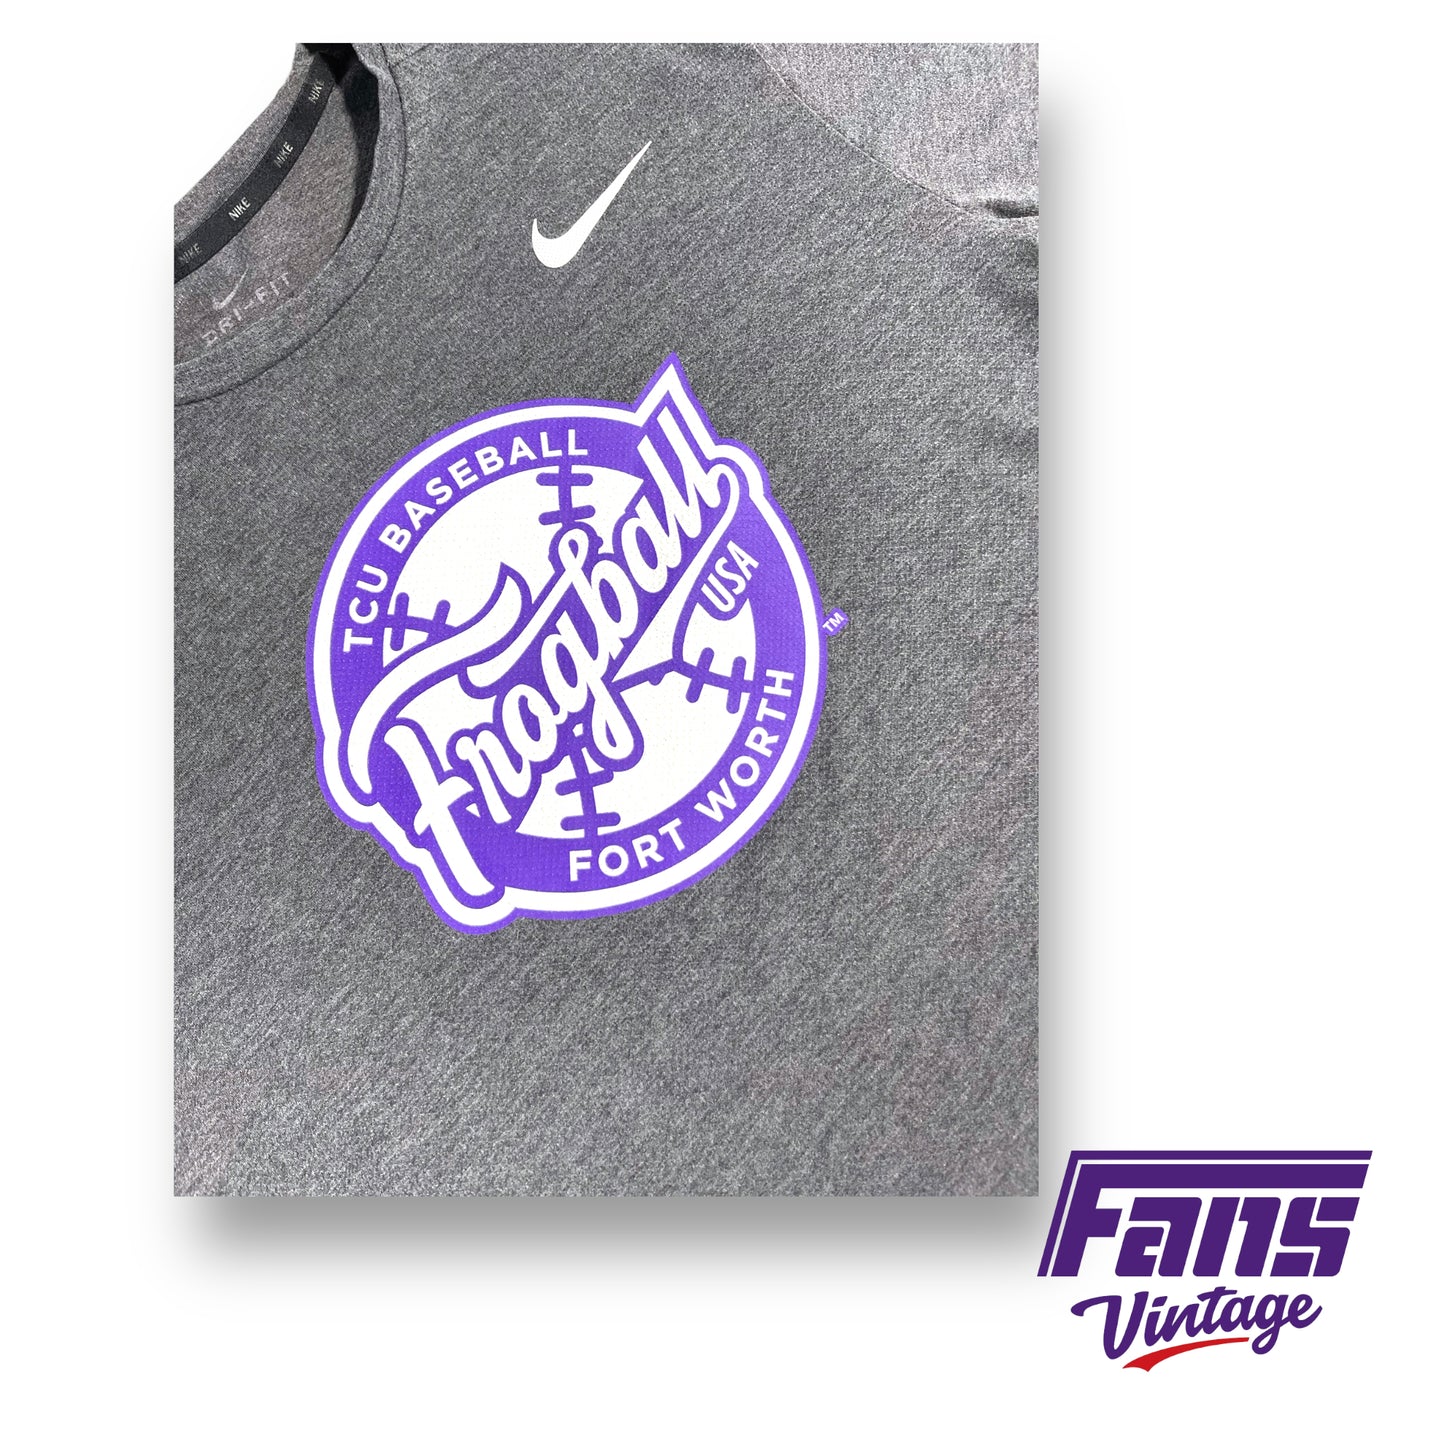 Nike TCU team issued 'Frogball' t-shirt